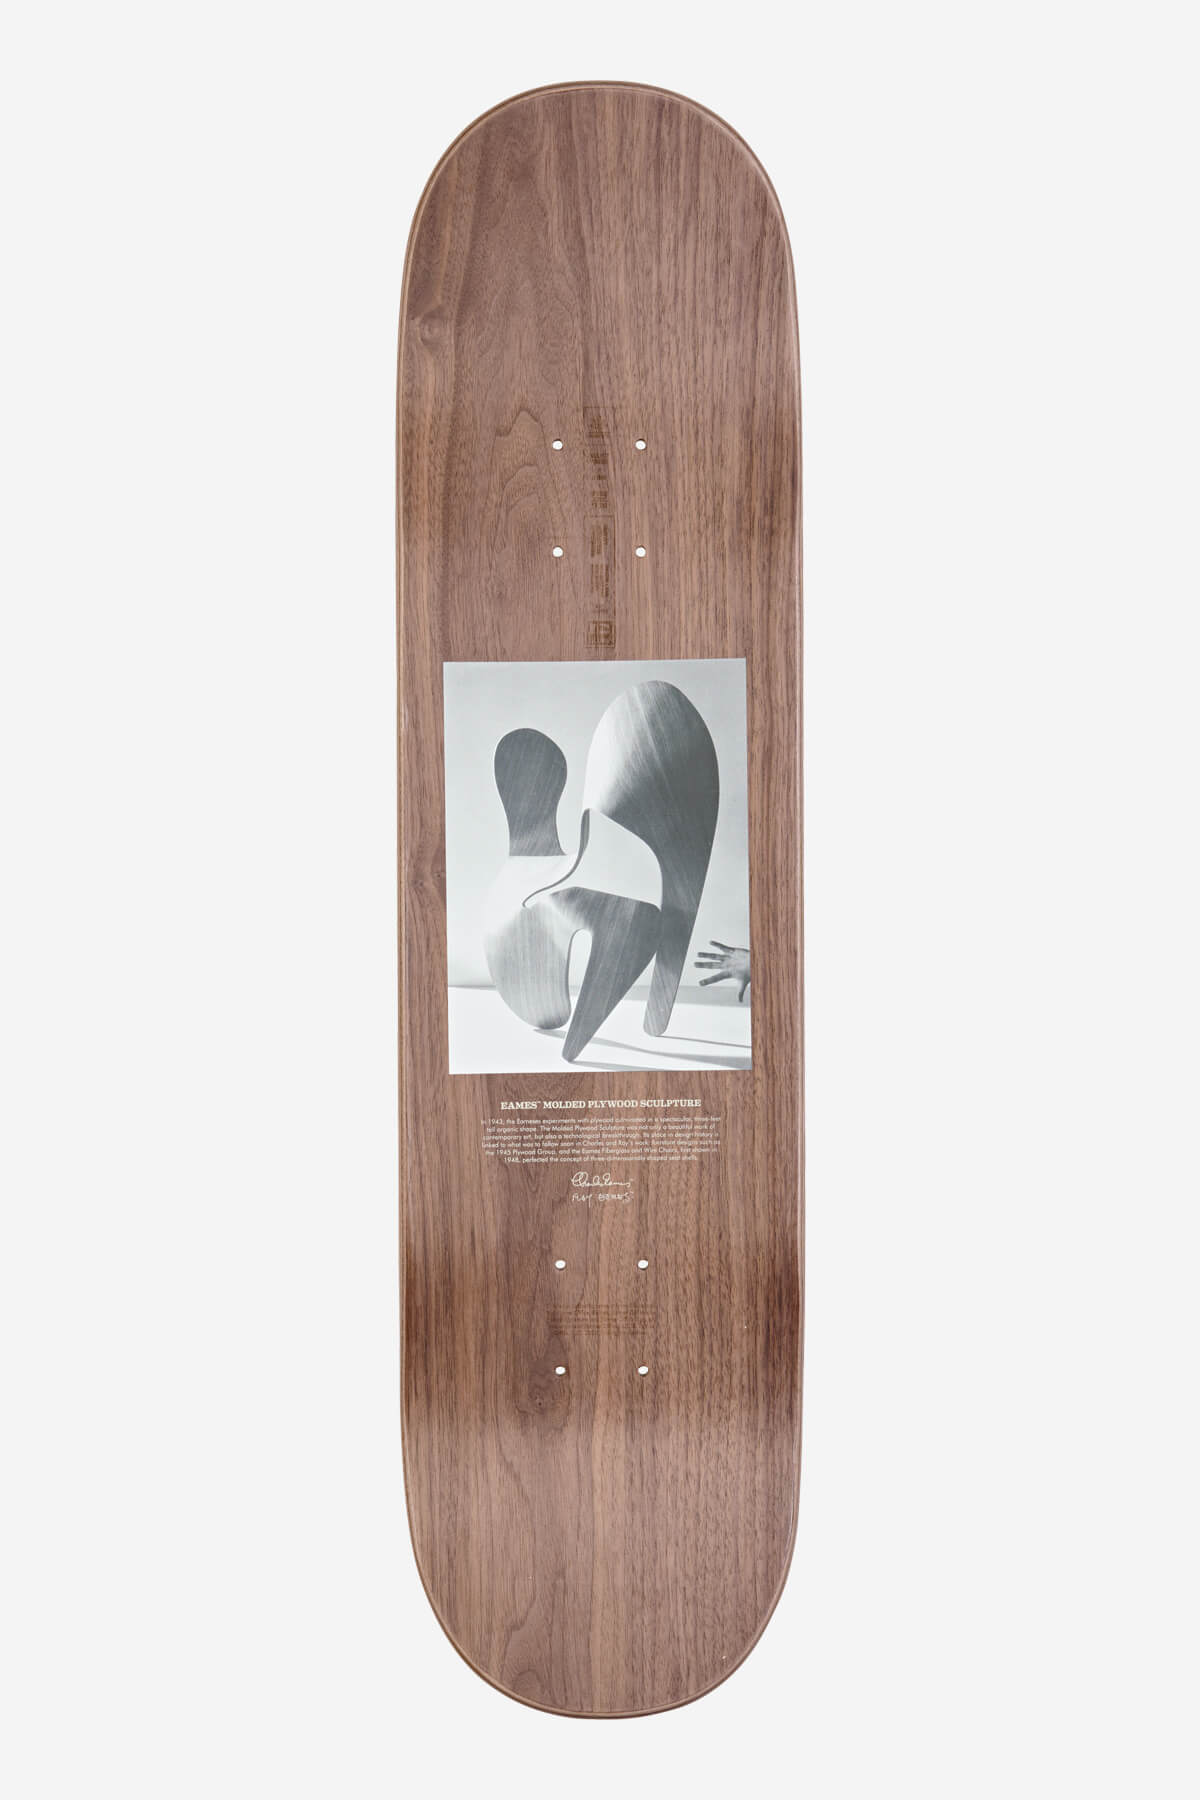 eames silhouette plywood sculpture 8.0" skateboard deck